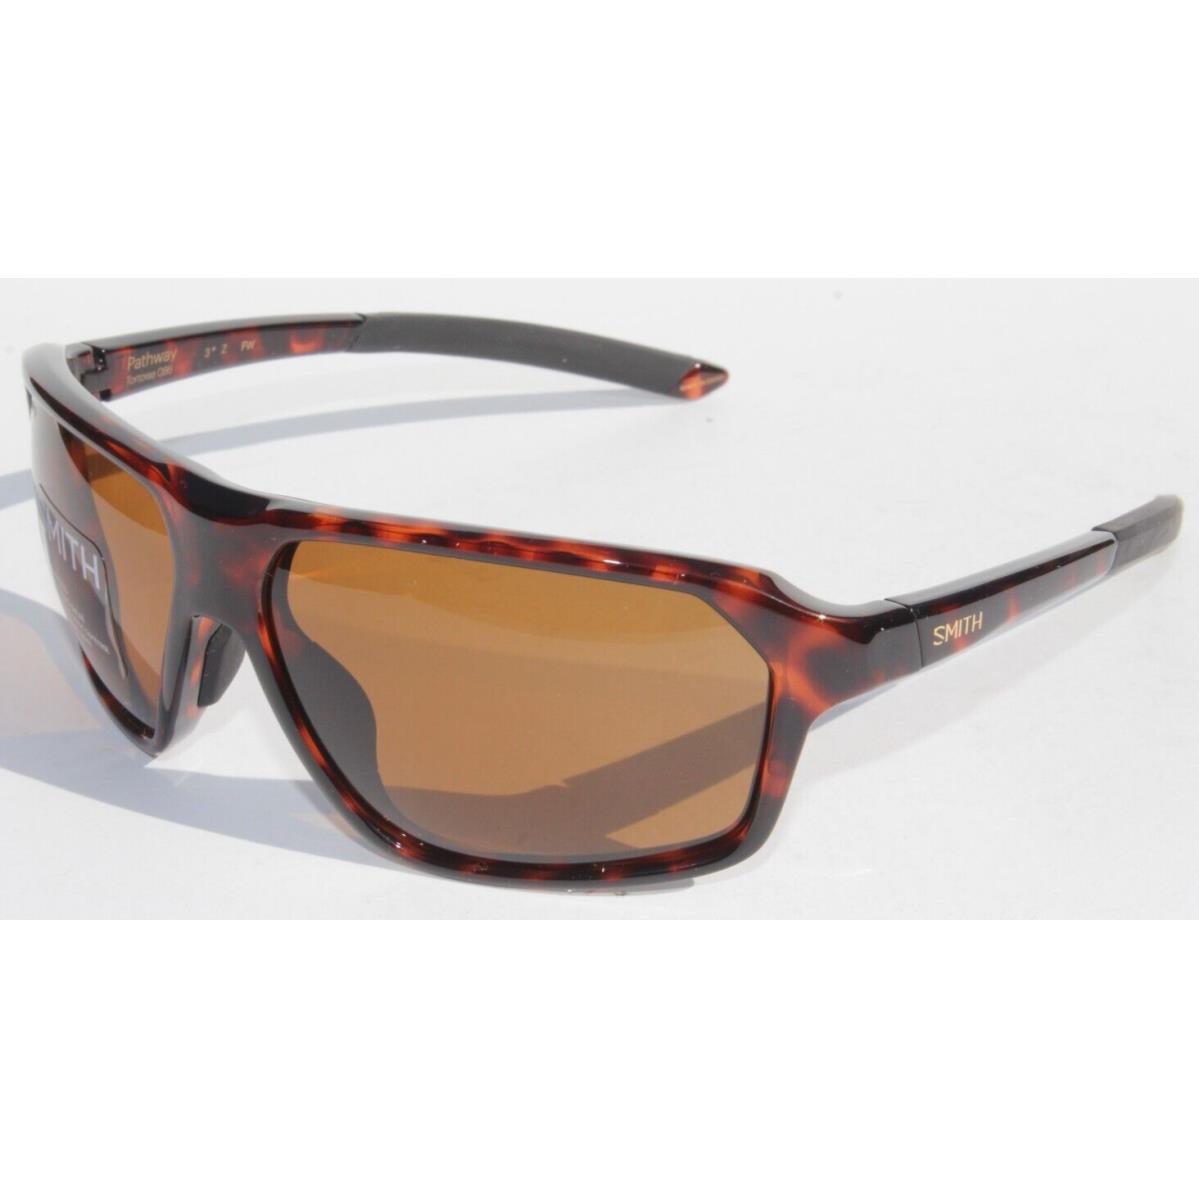 Smith Optics sunglasses Pathway - Brown Frame, Brown Lens 2